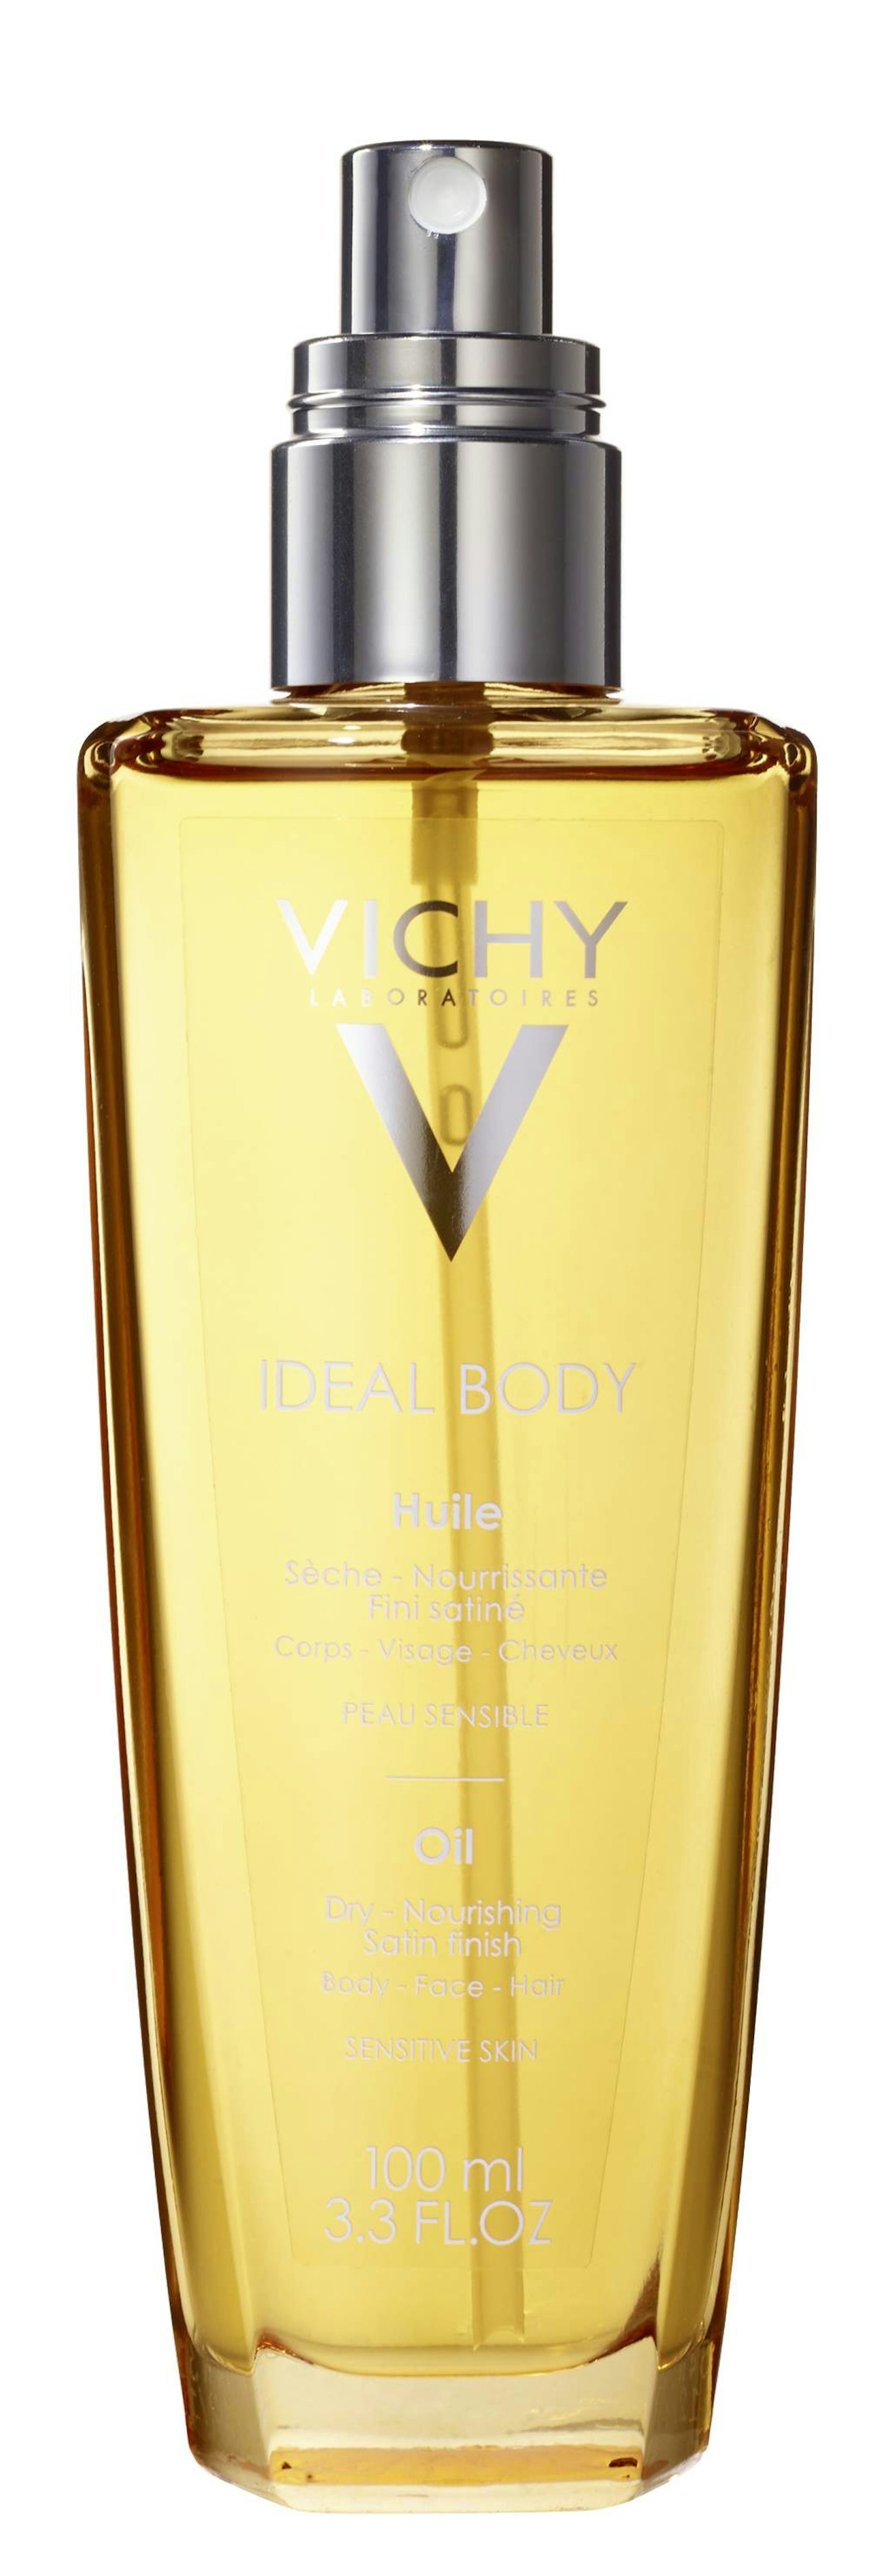 vichy-dry-oil